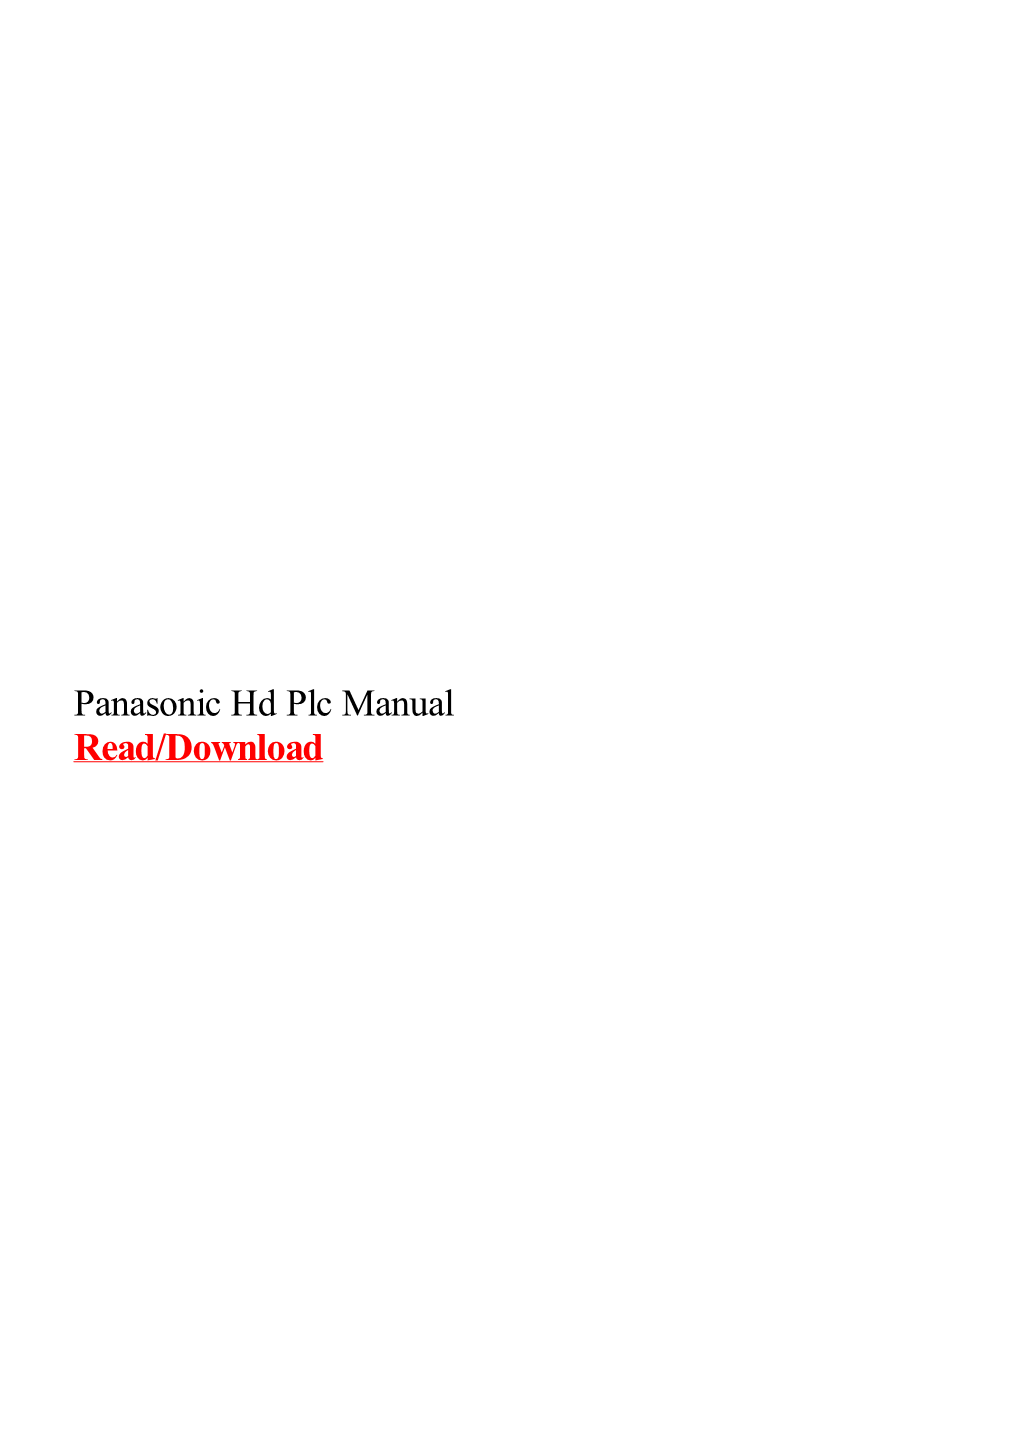 Panasonic Hd Plc Manual.Pdf